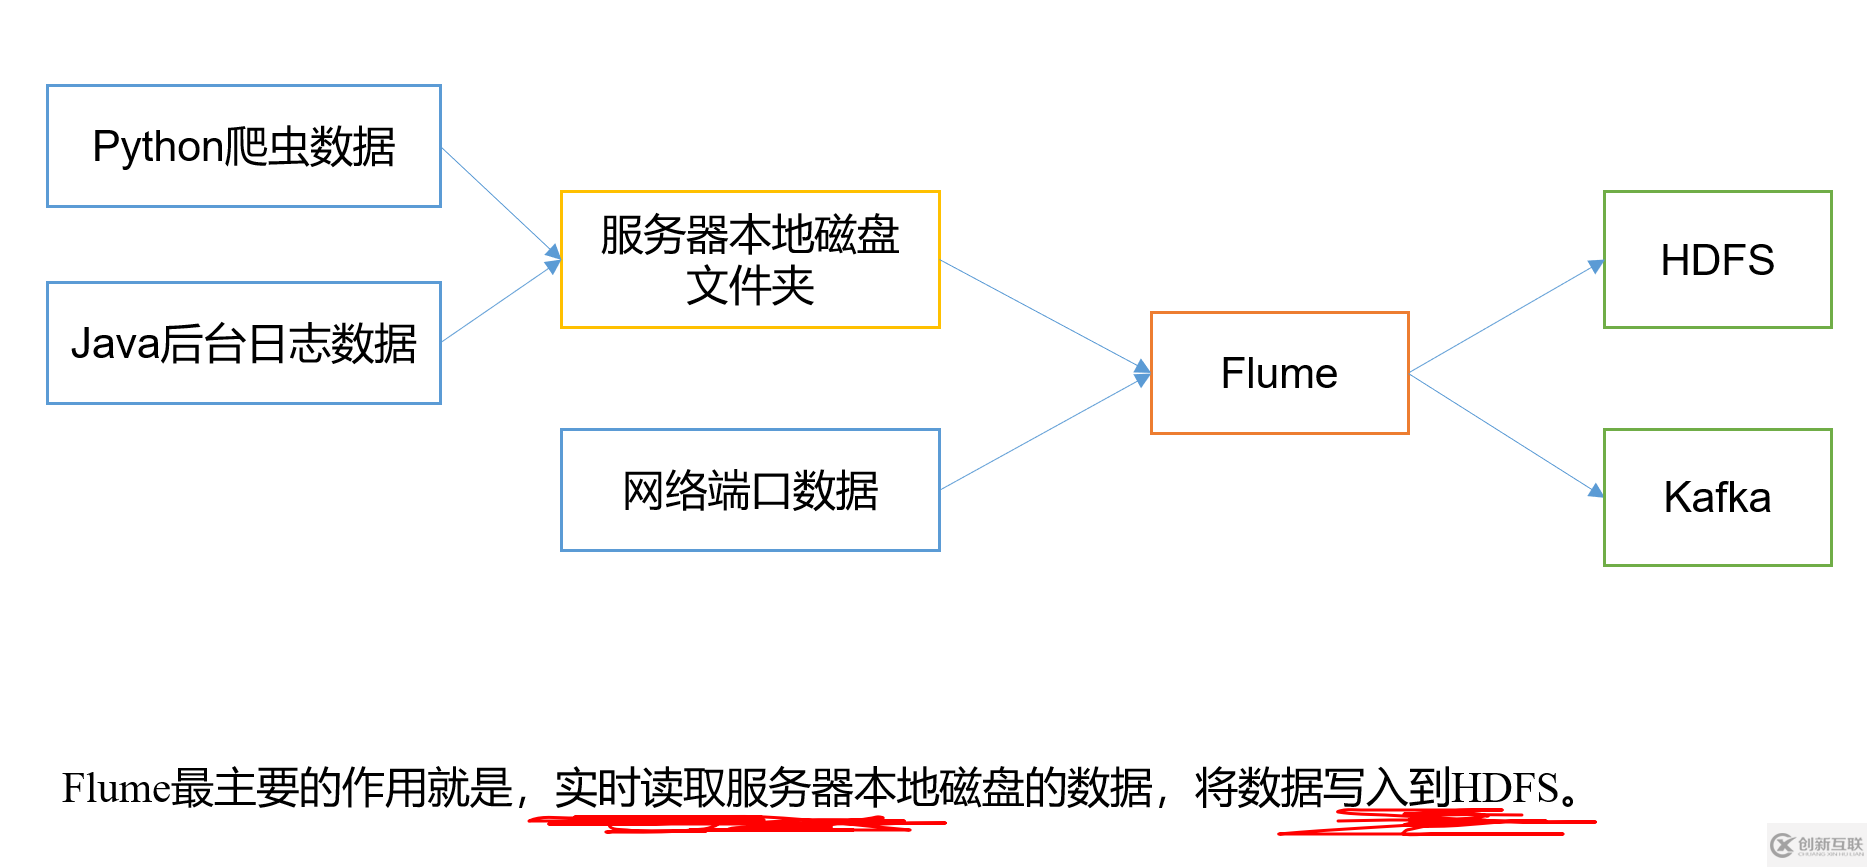 Flume基础架构是什么